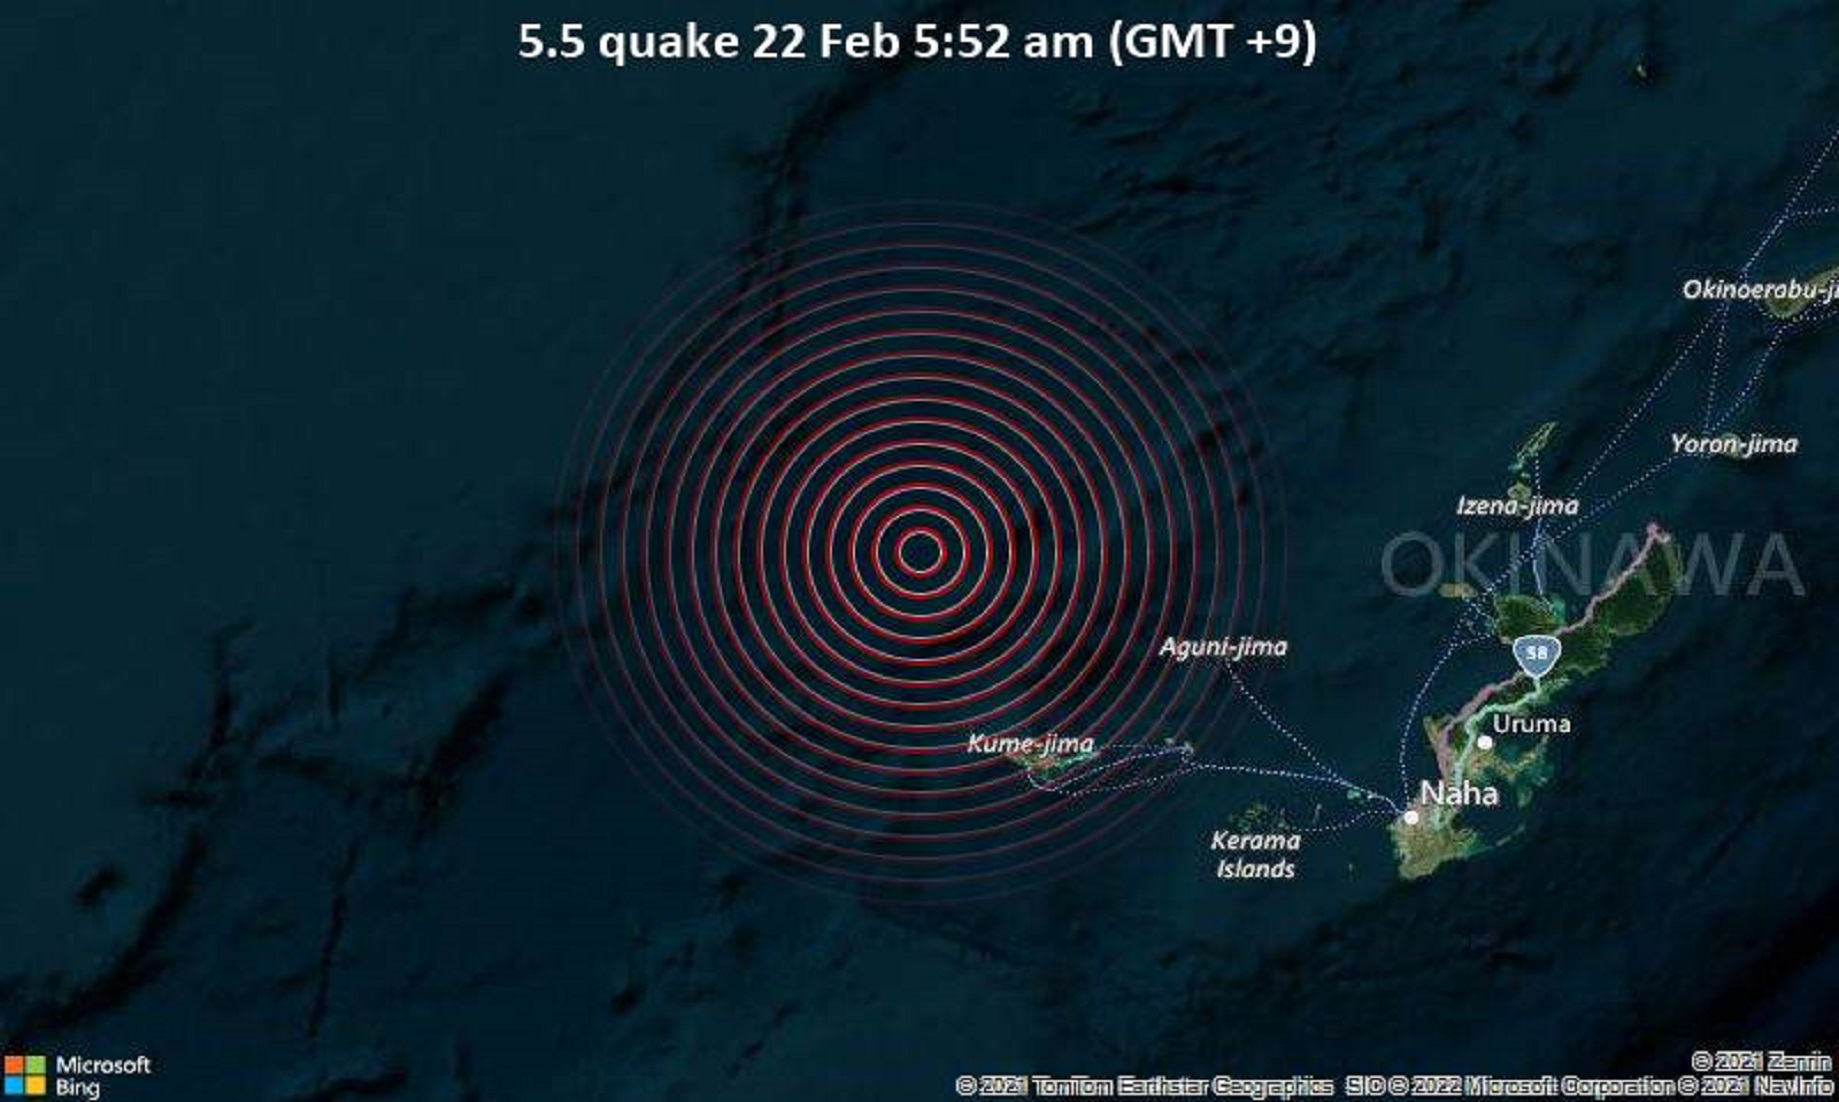 5.5-Magnitude Quake Hit 136 Km NW Of Naha, Japan